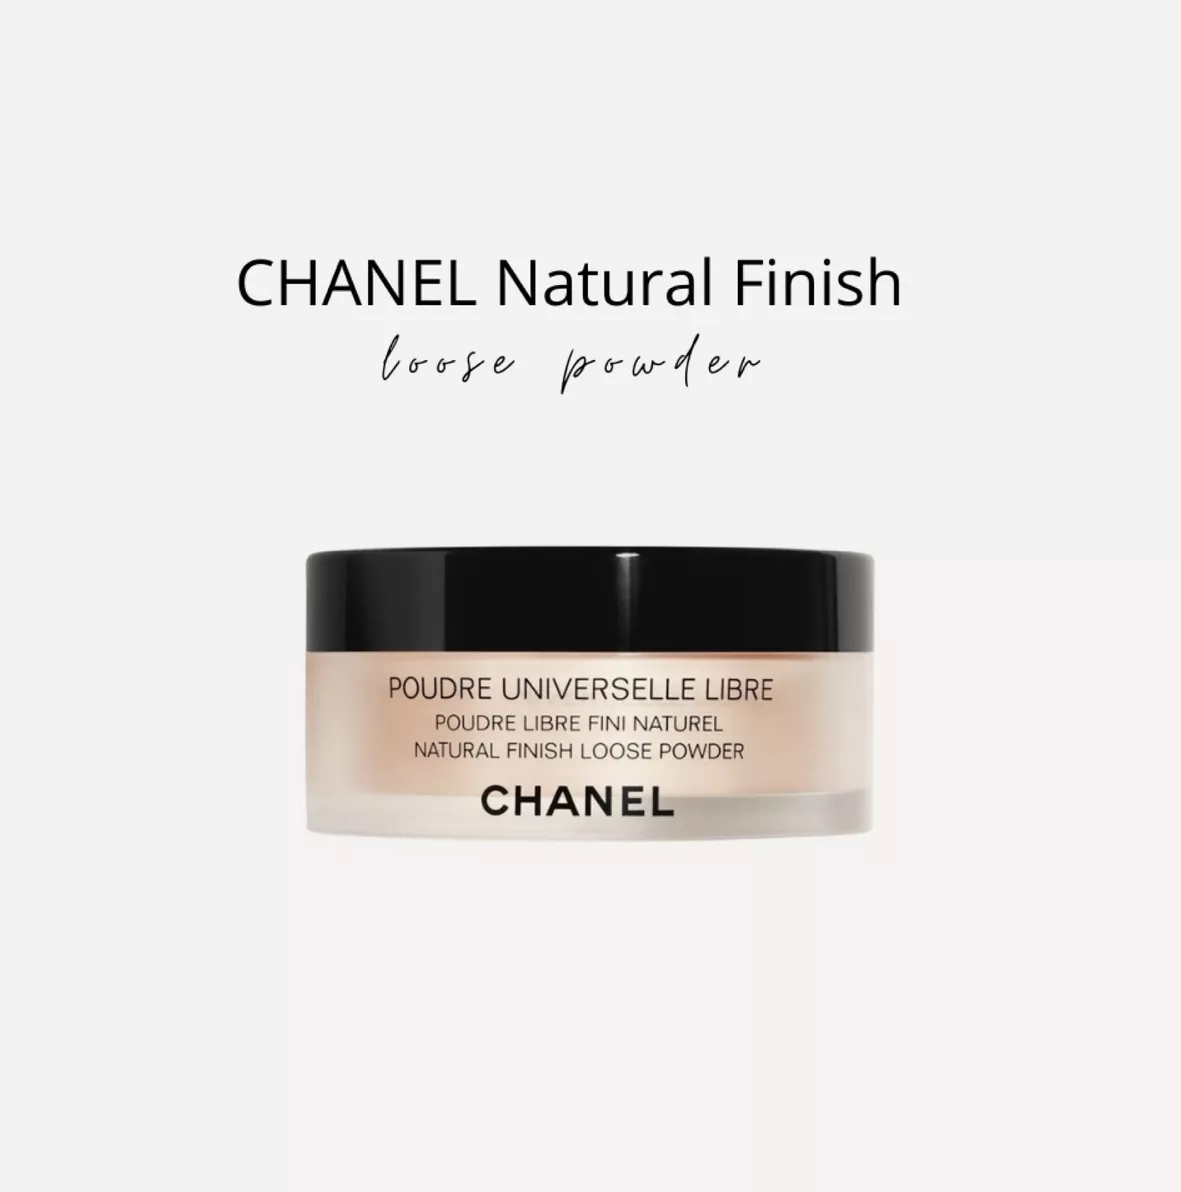 CHANEL (POUDRE UNIVERSELLE LIBRE?) Natural Finish Loose Powder?